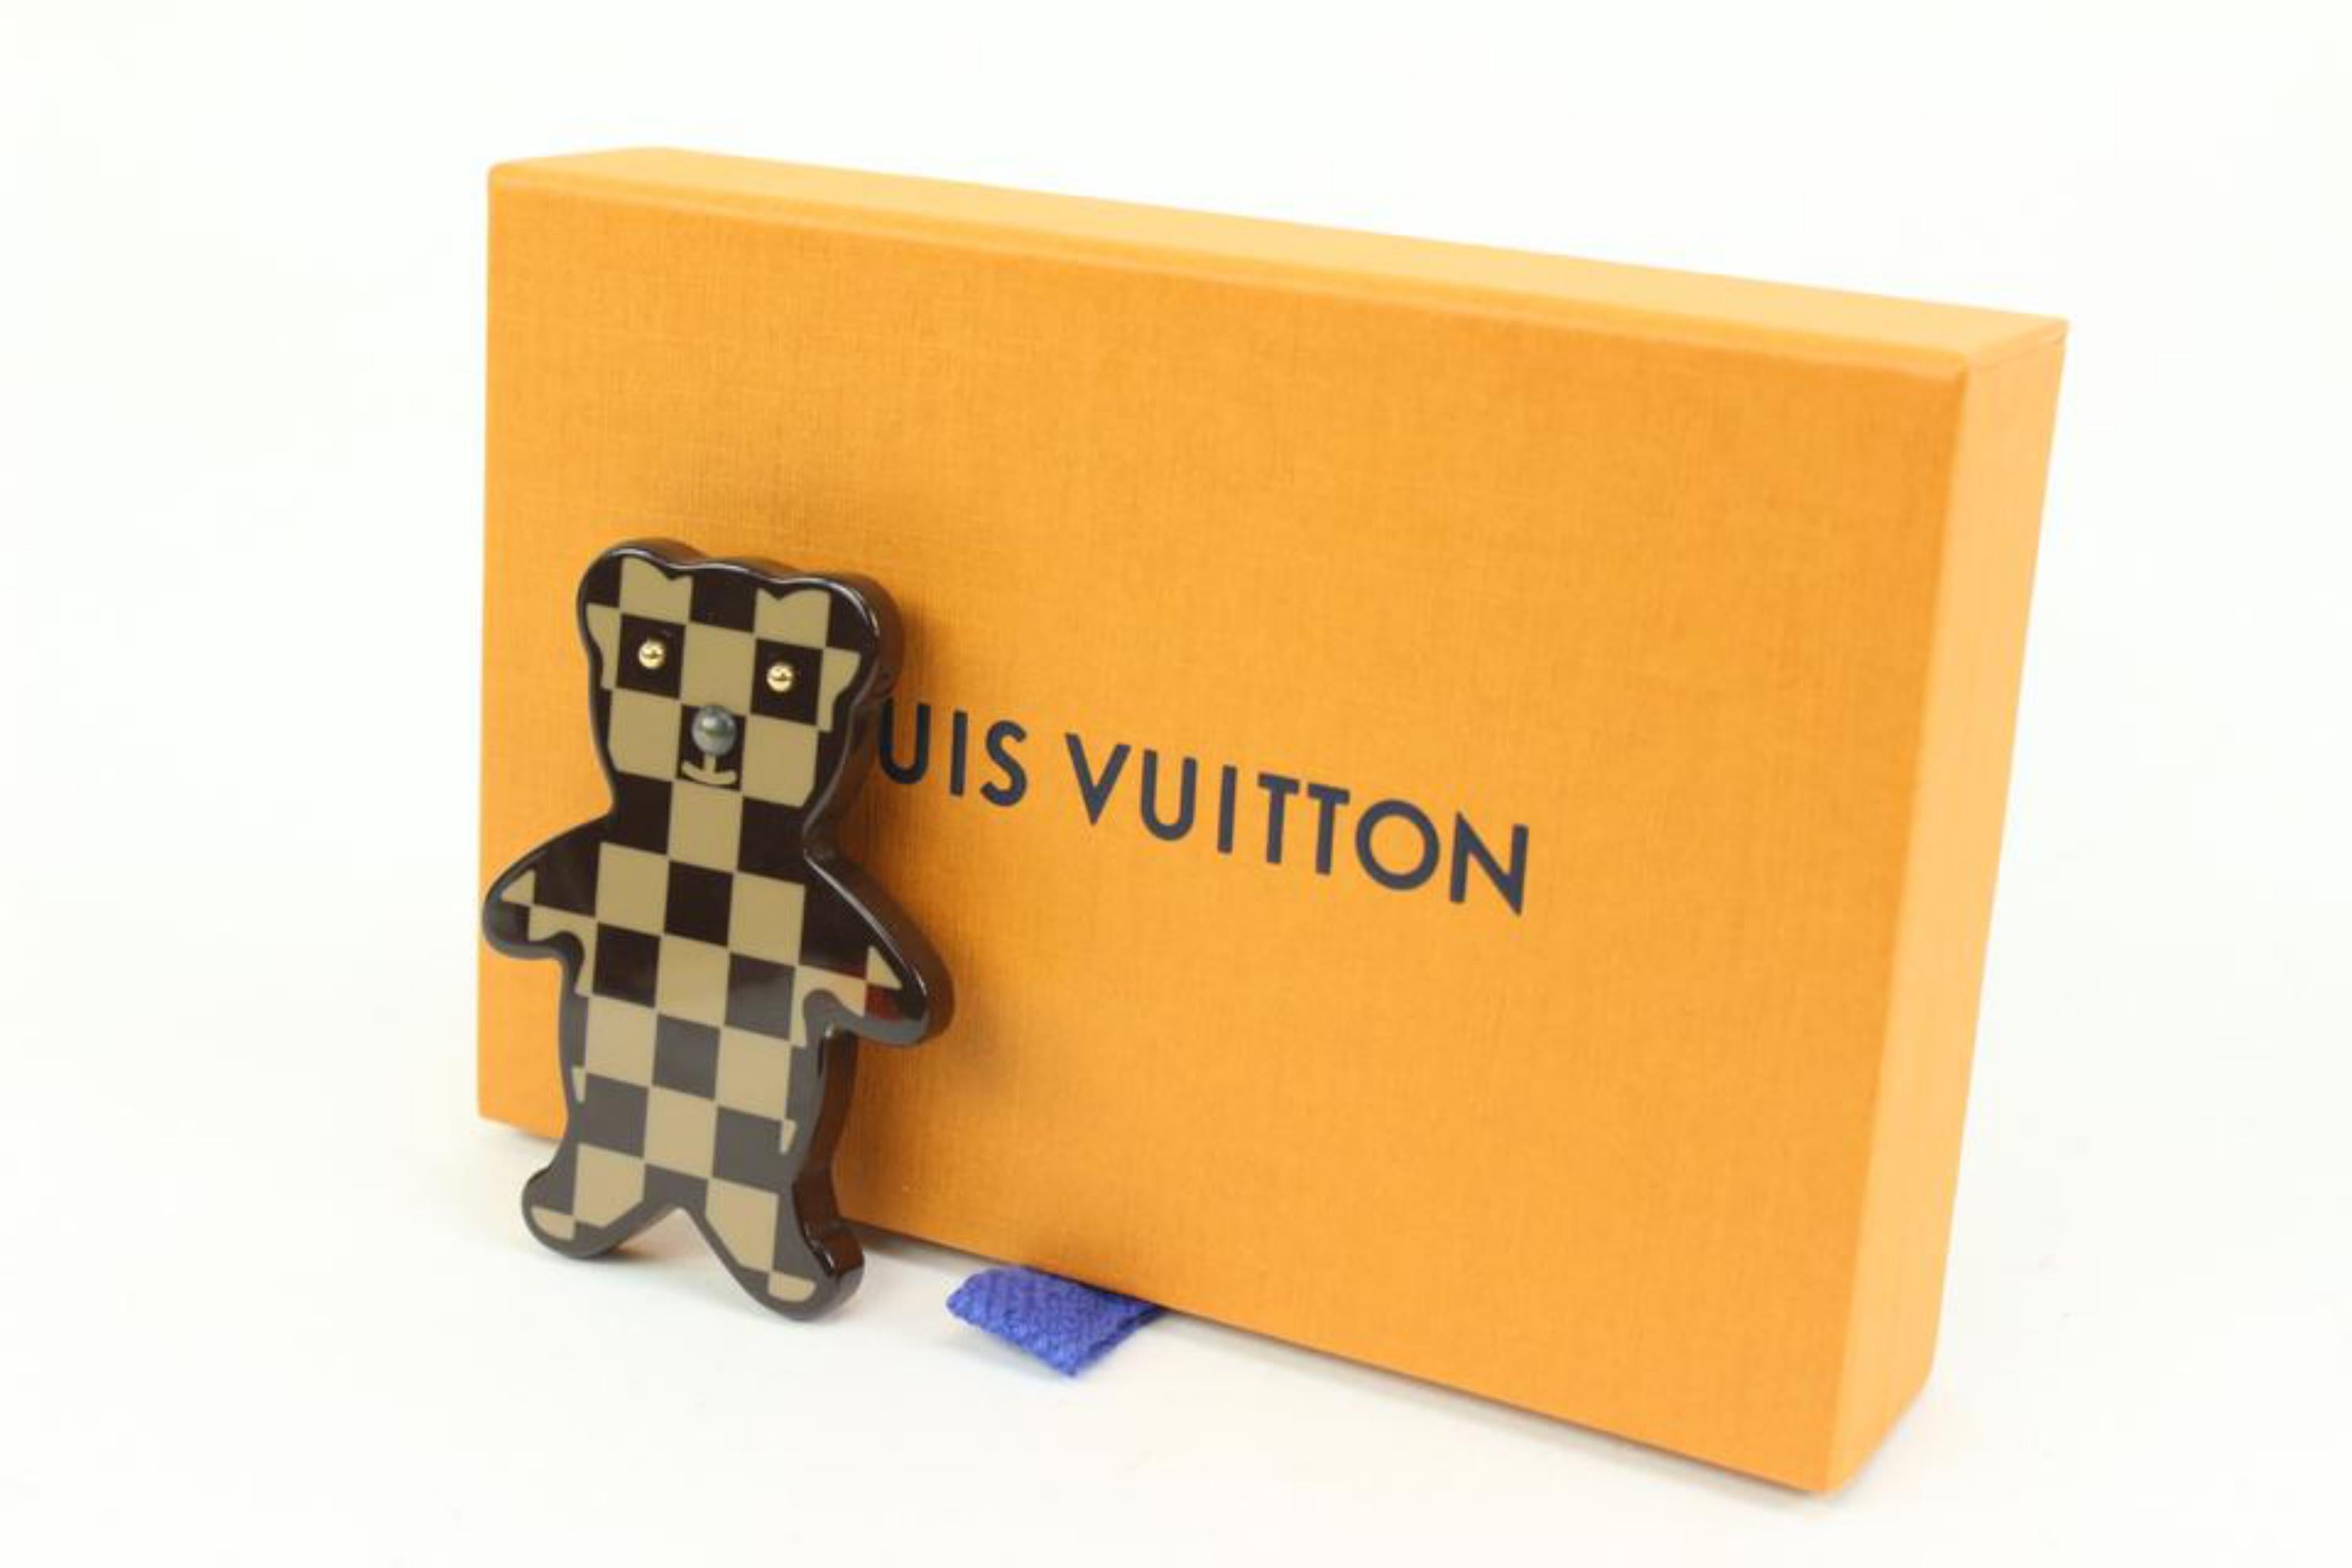 Louis Vuitton Fashion Brooches & Pins for sale